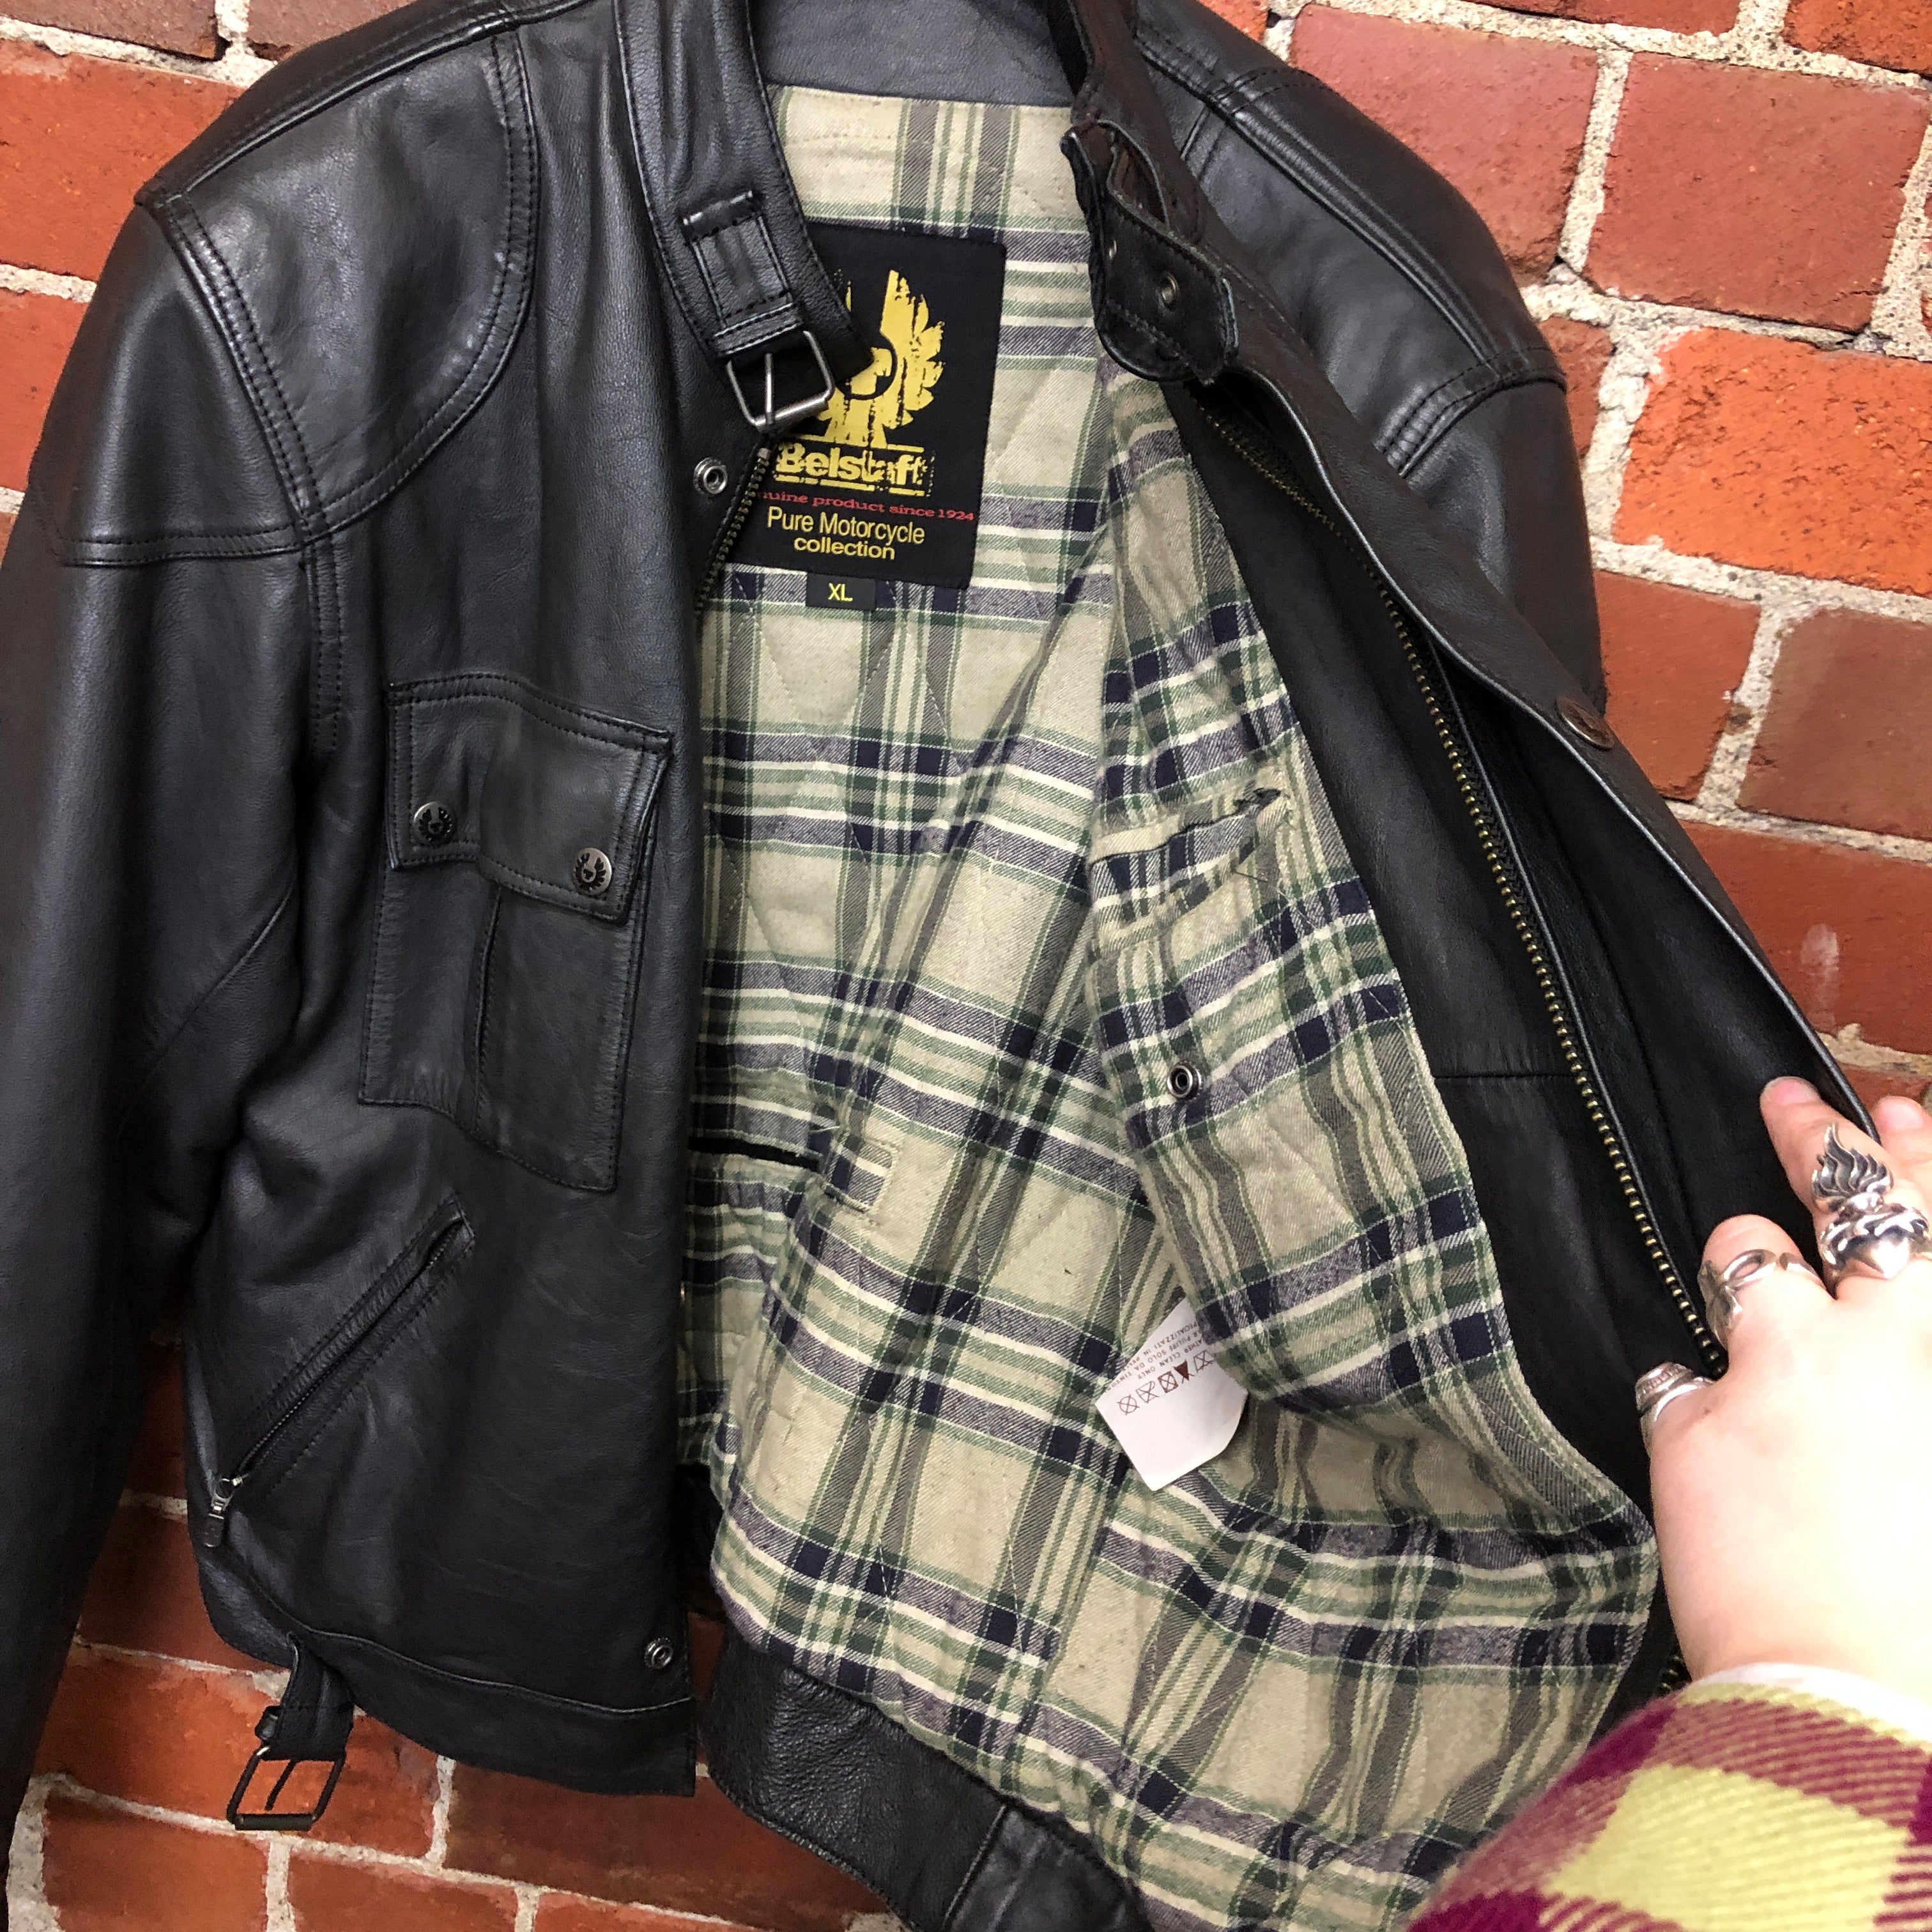 BELSTAFF leather jacket XL